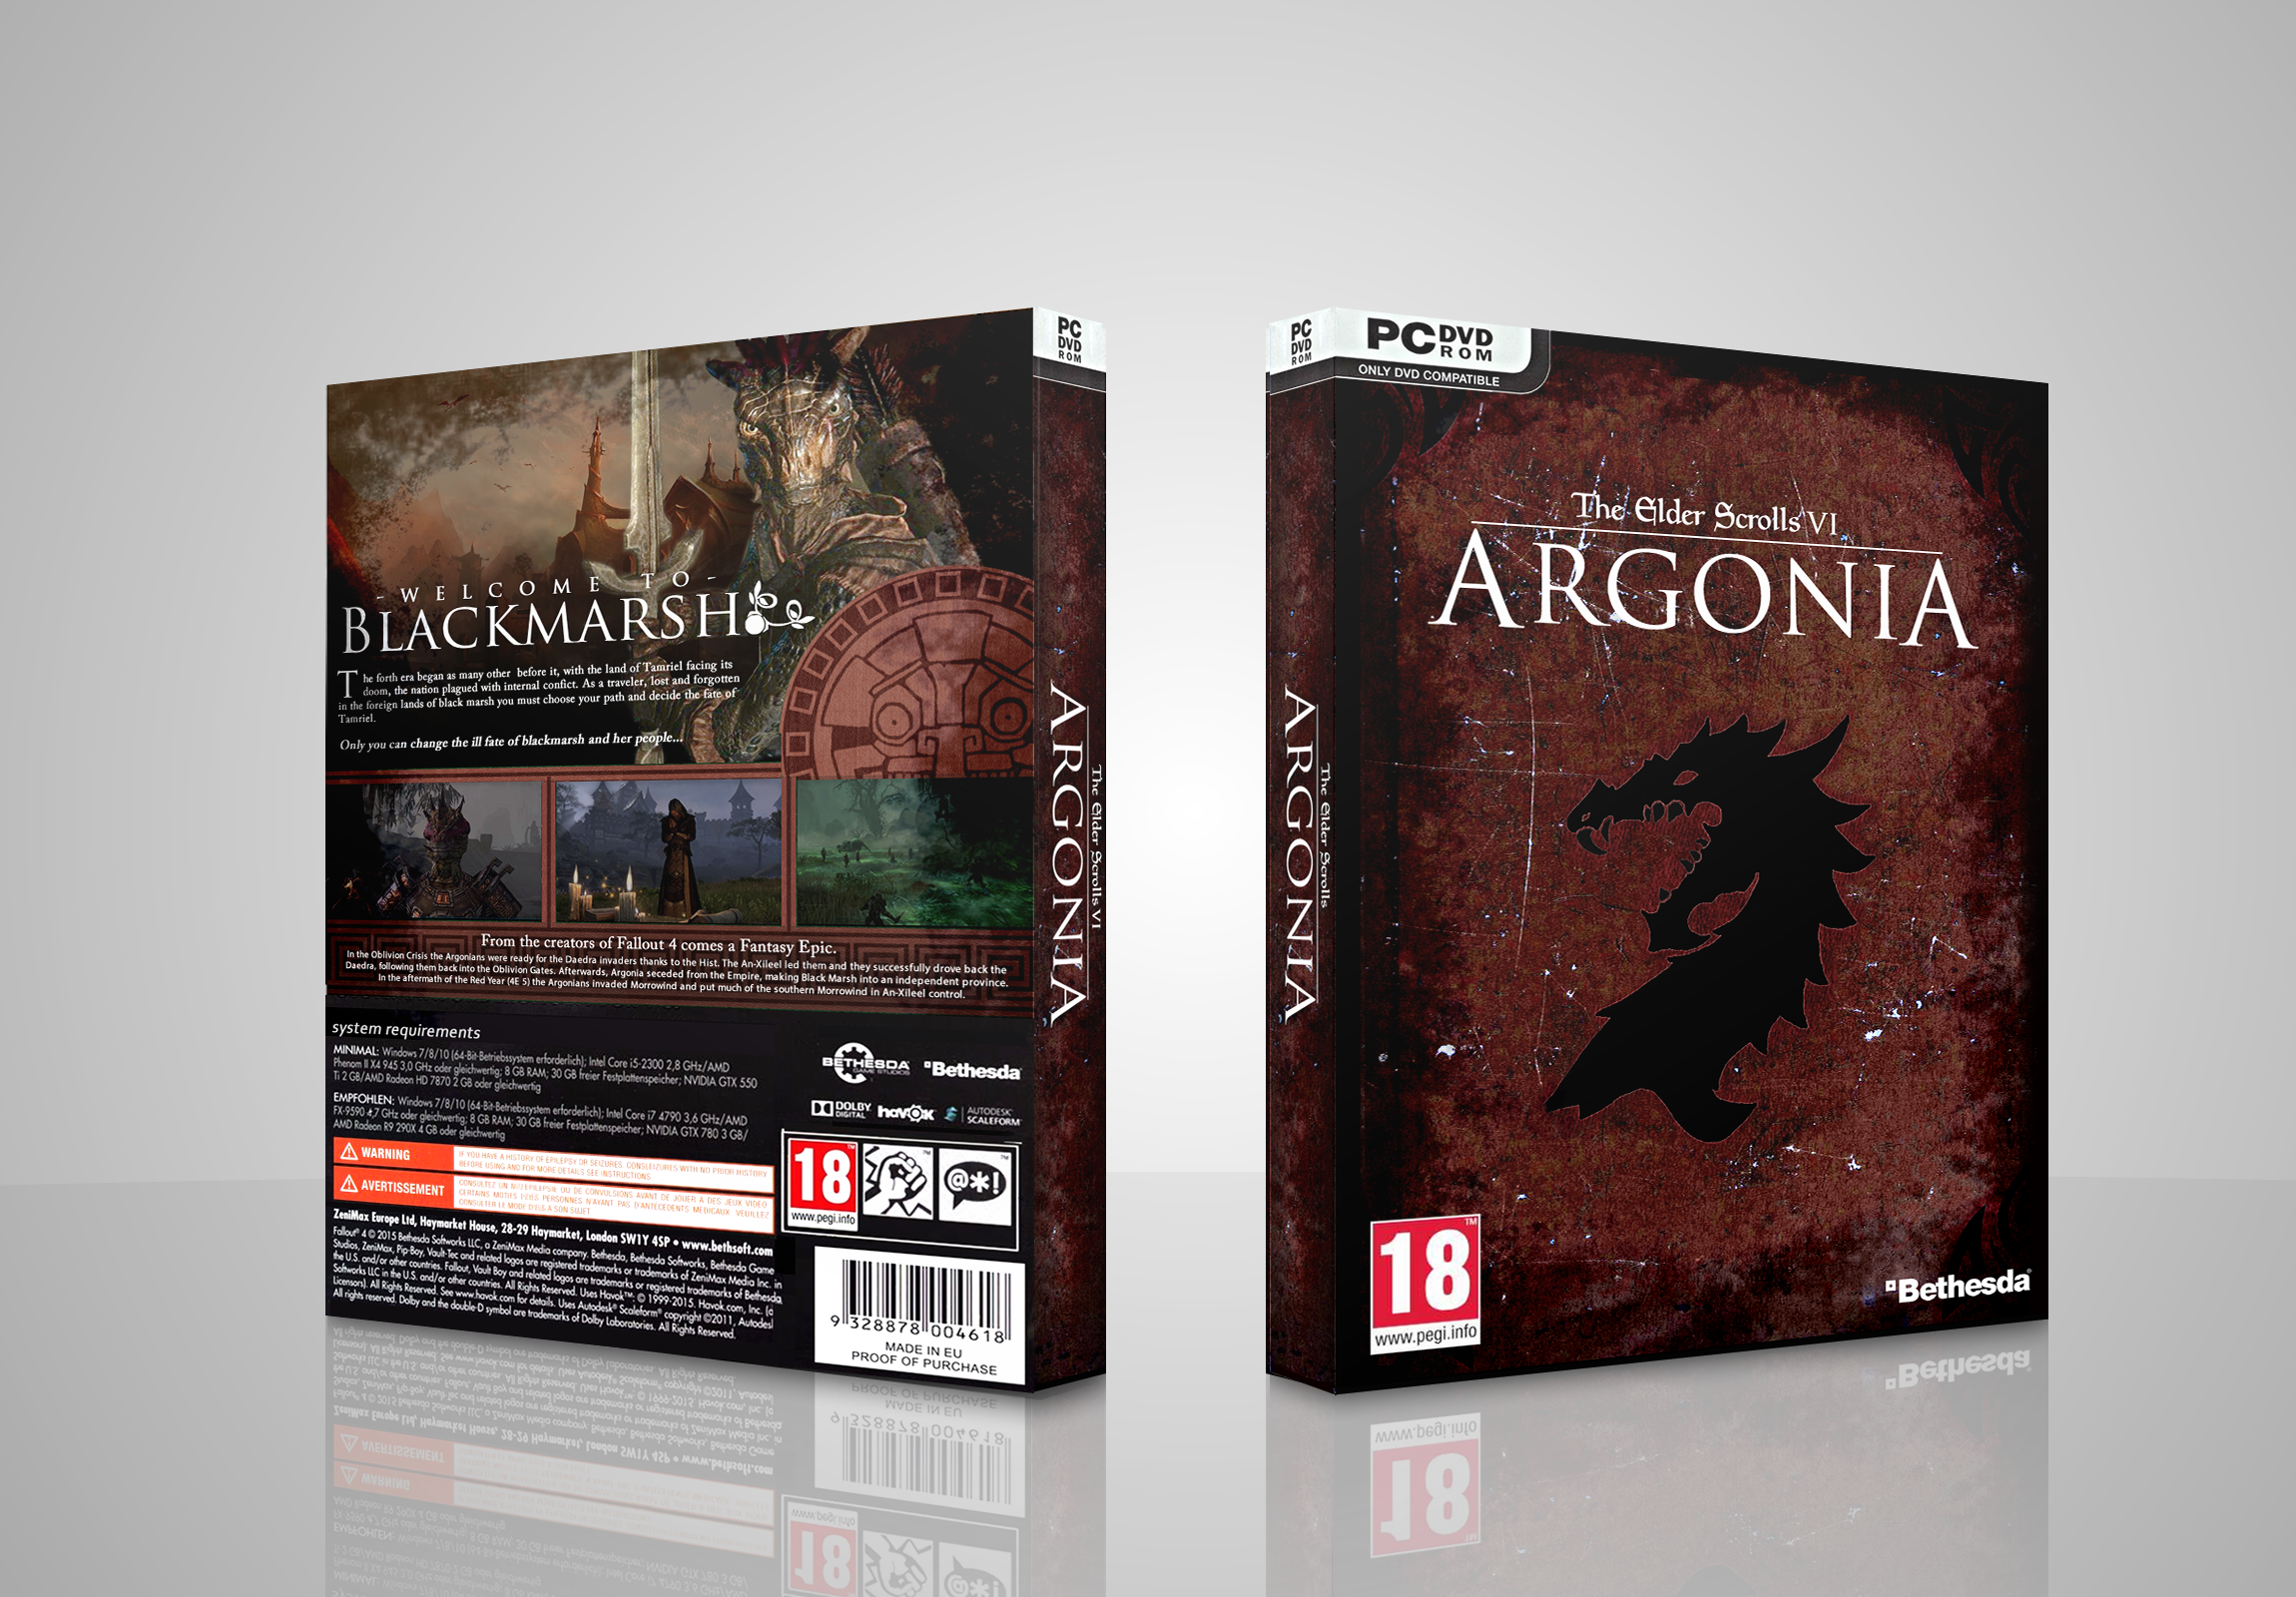 The Elder Scrolls VI: Argonia box cover